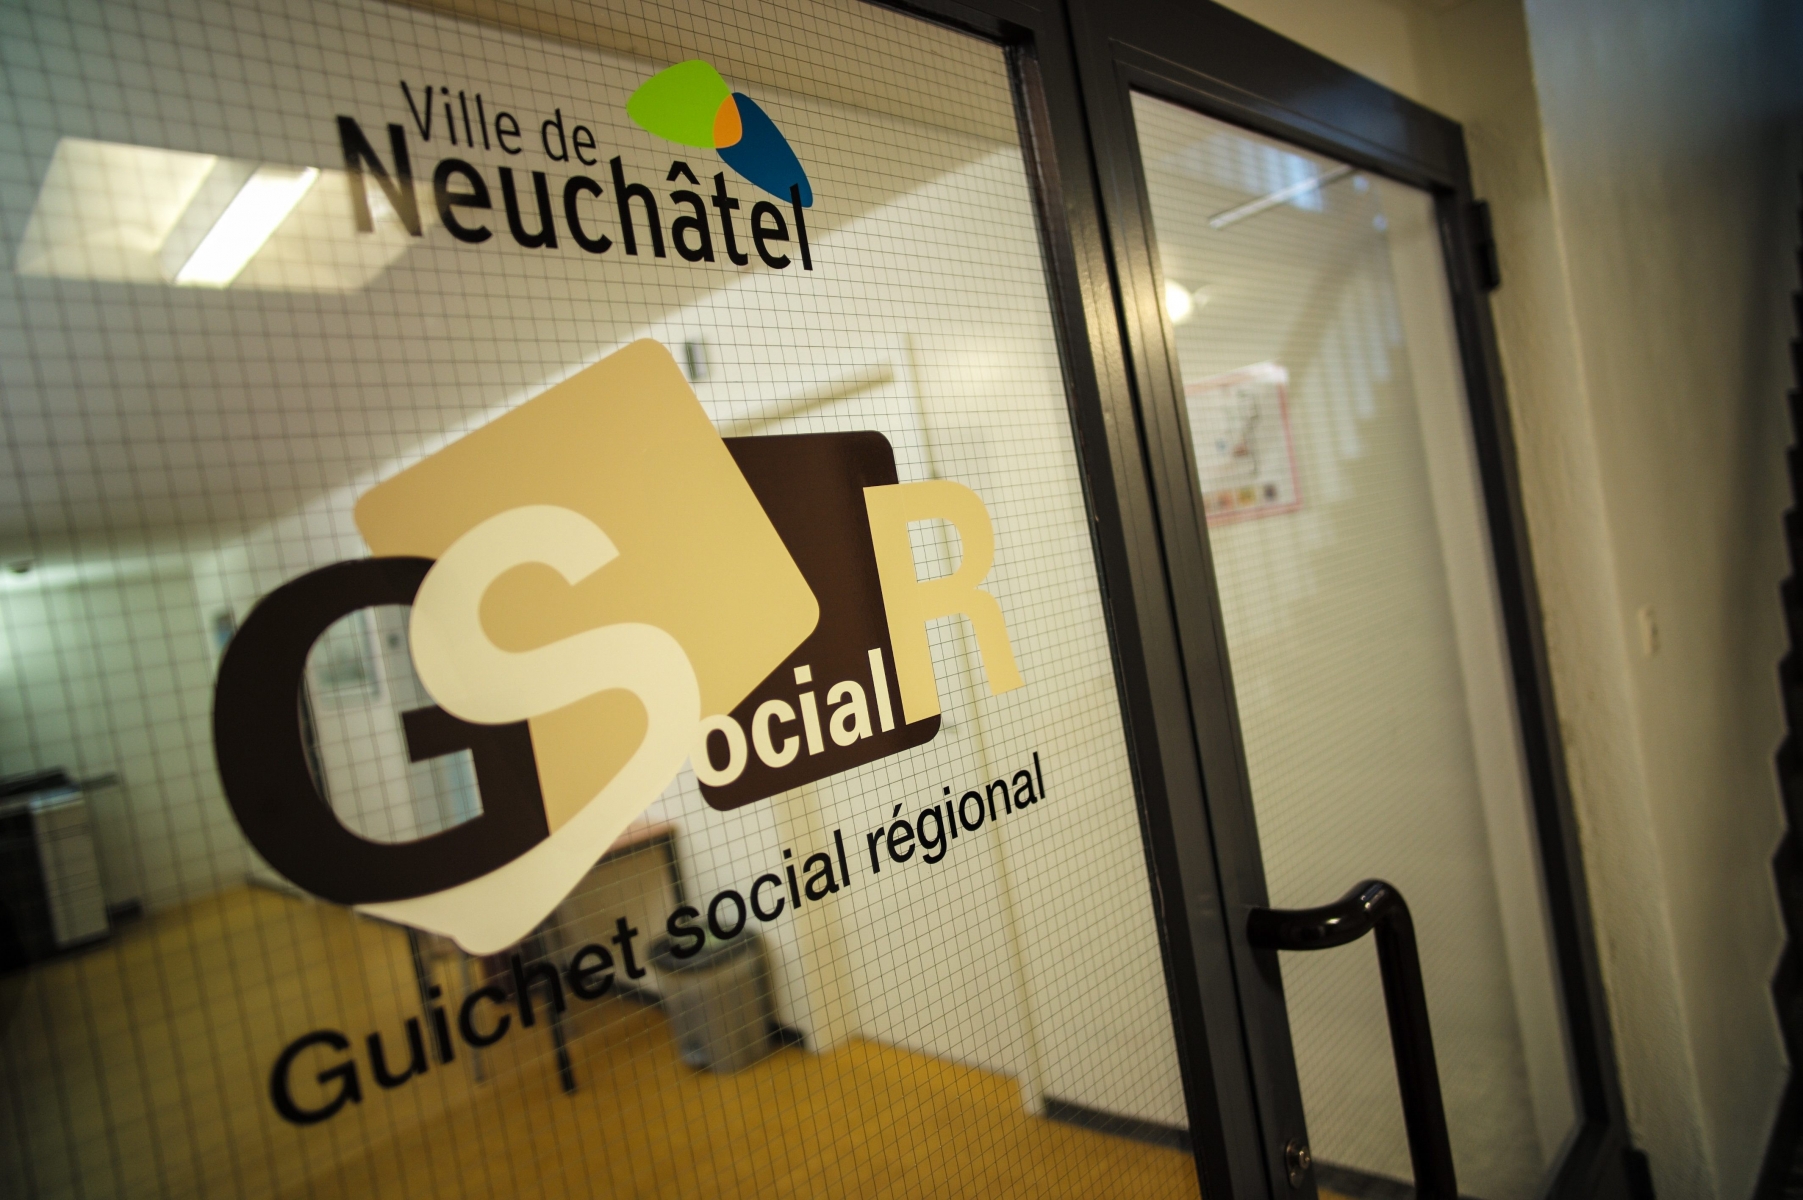 Ville de Neuchatel: guichet social regional GSR



NEUCHATEL

10 01 2014

Photo: Christian Galley NEUCHATEL